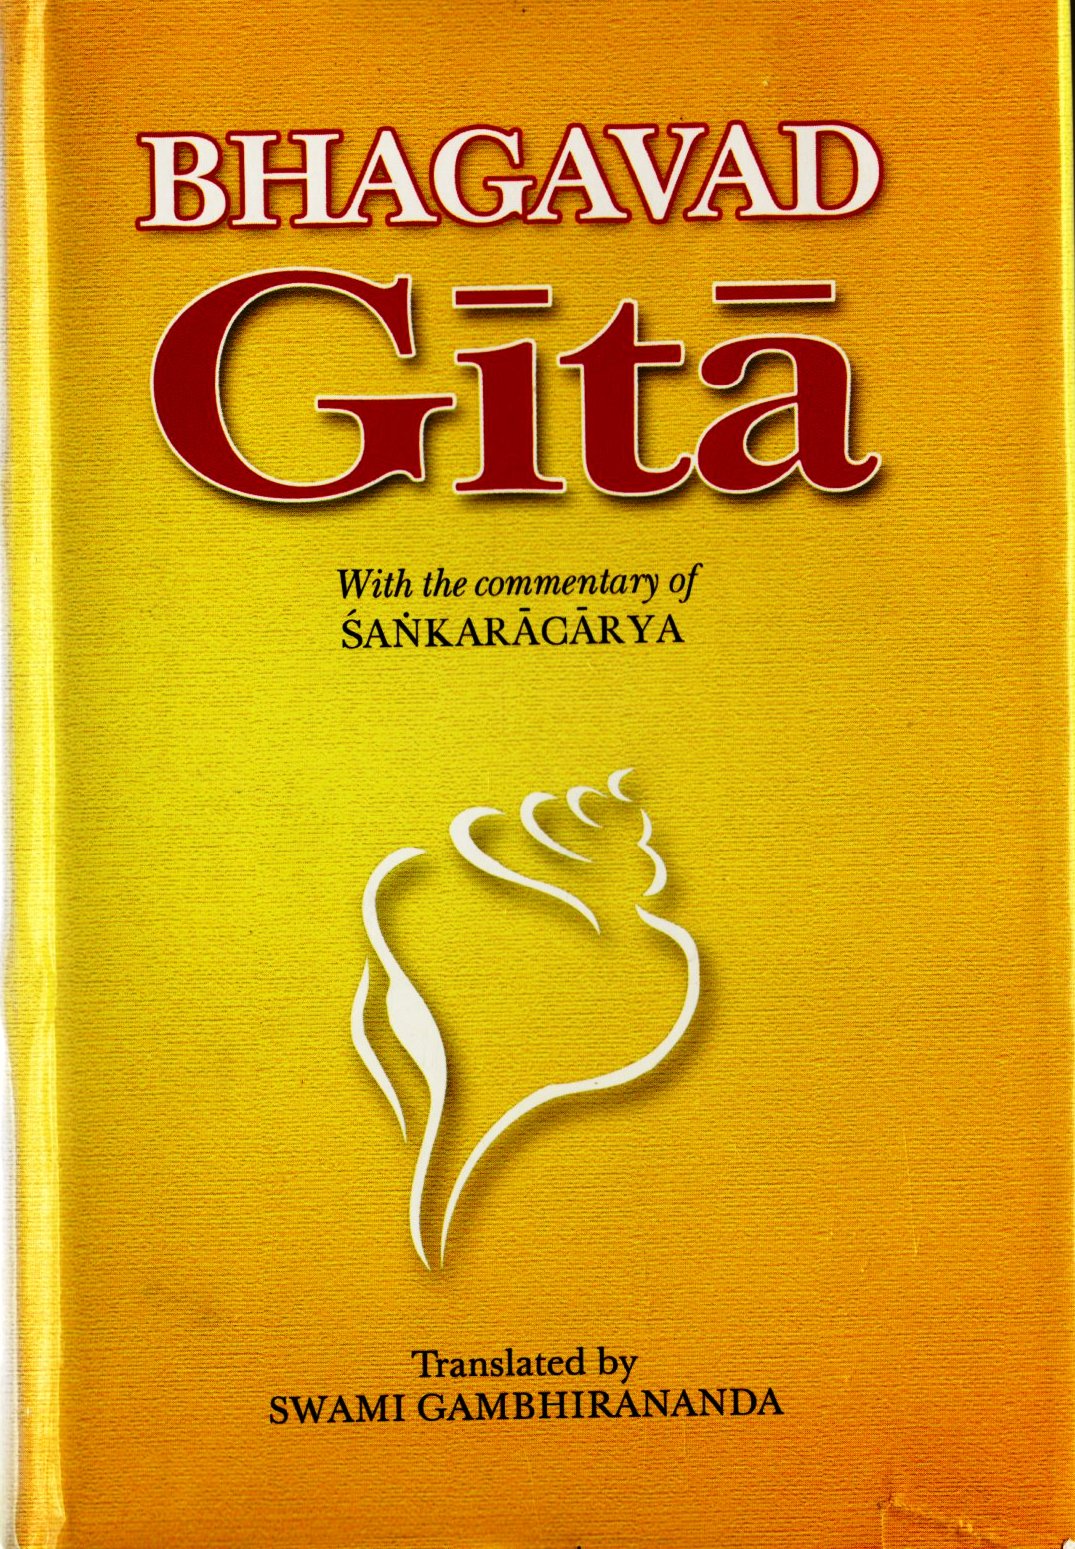 Bhagavad Gita